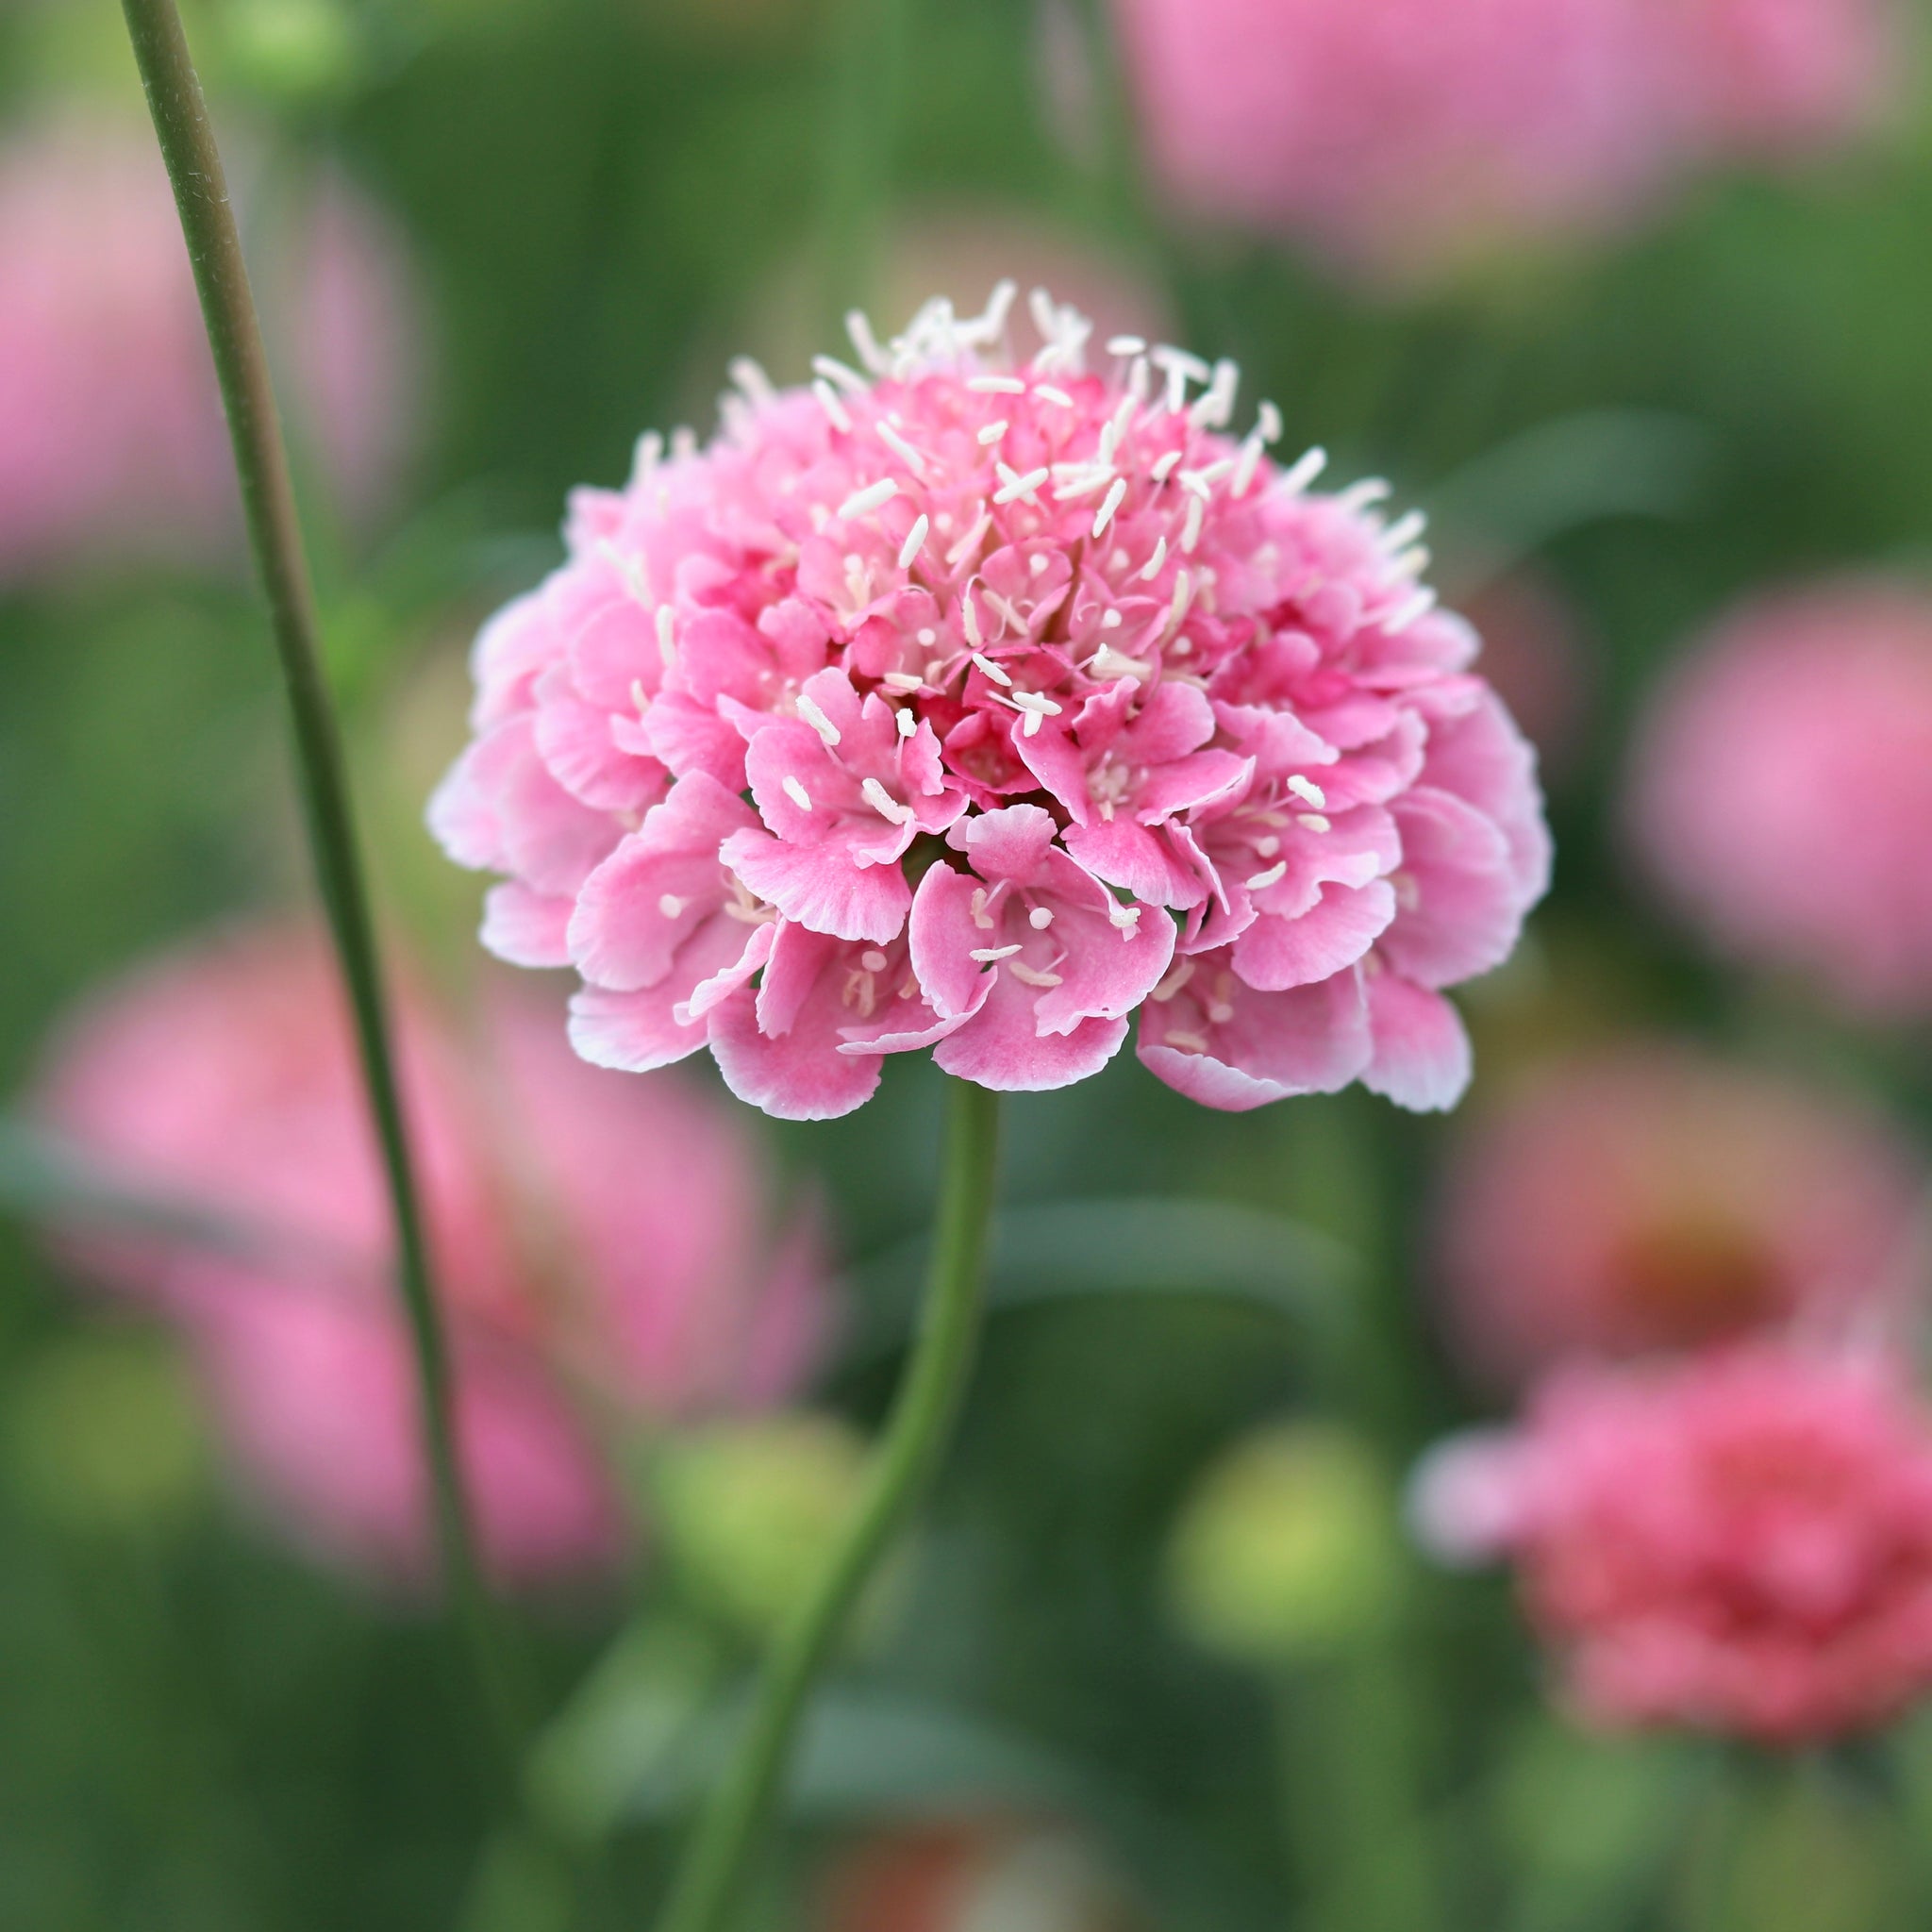 Flower Wrist Pincushion Pink Asian Tea Rose Pin Cushion 